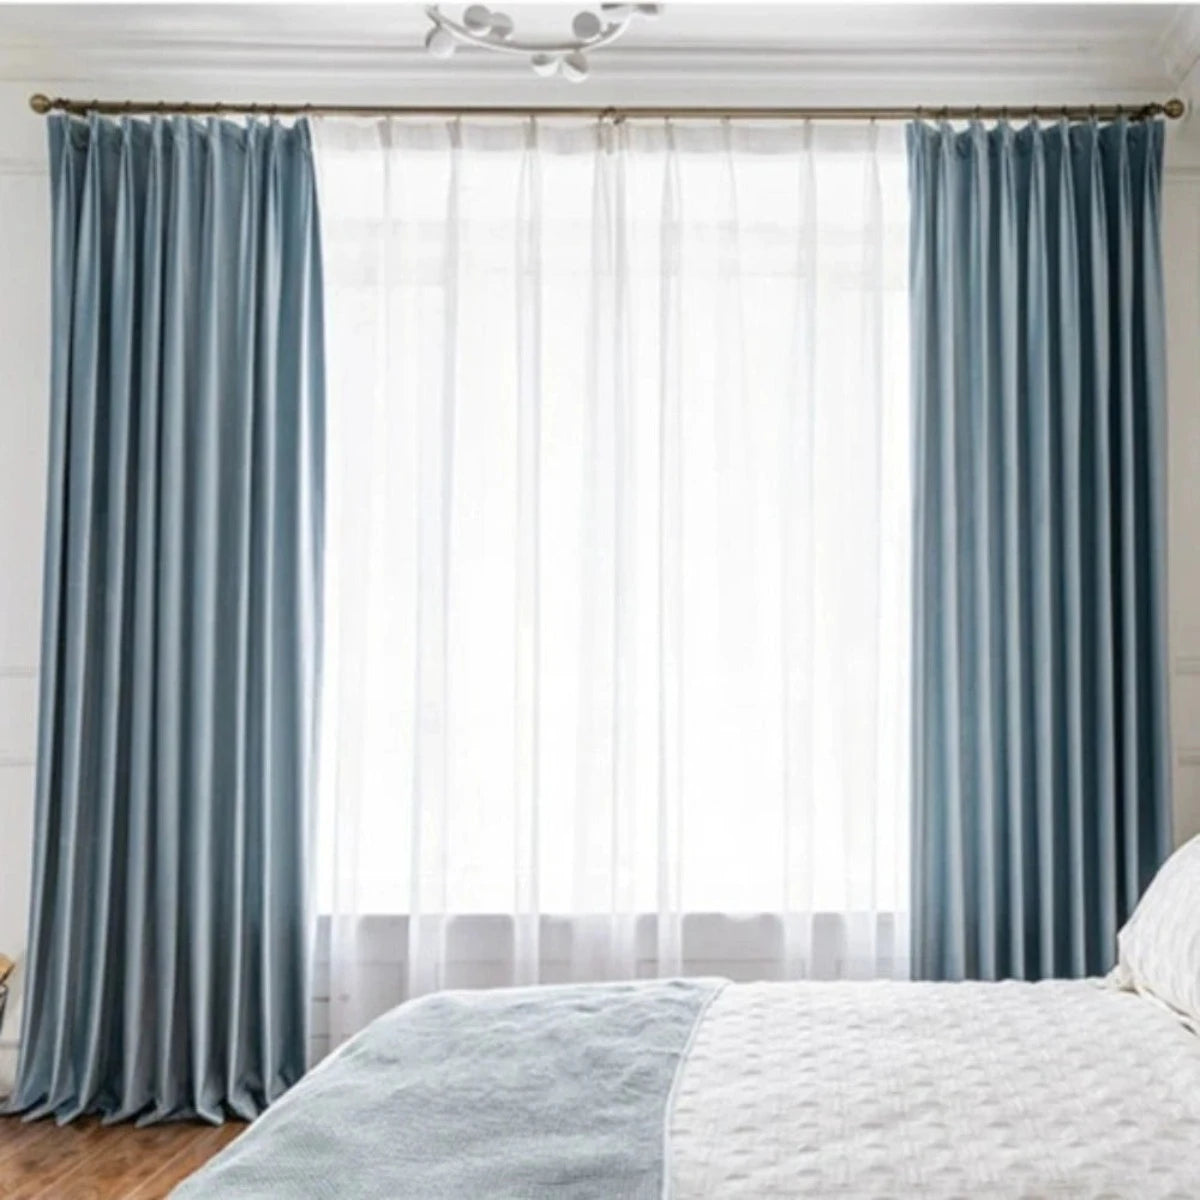 SILKMAJESTY VELVET DELIGHT AZURE Blackout Curtains - Home Curtains